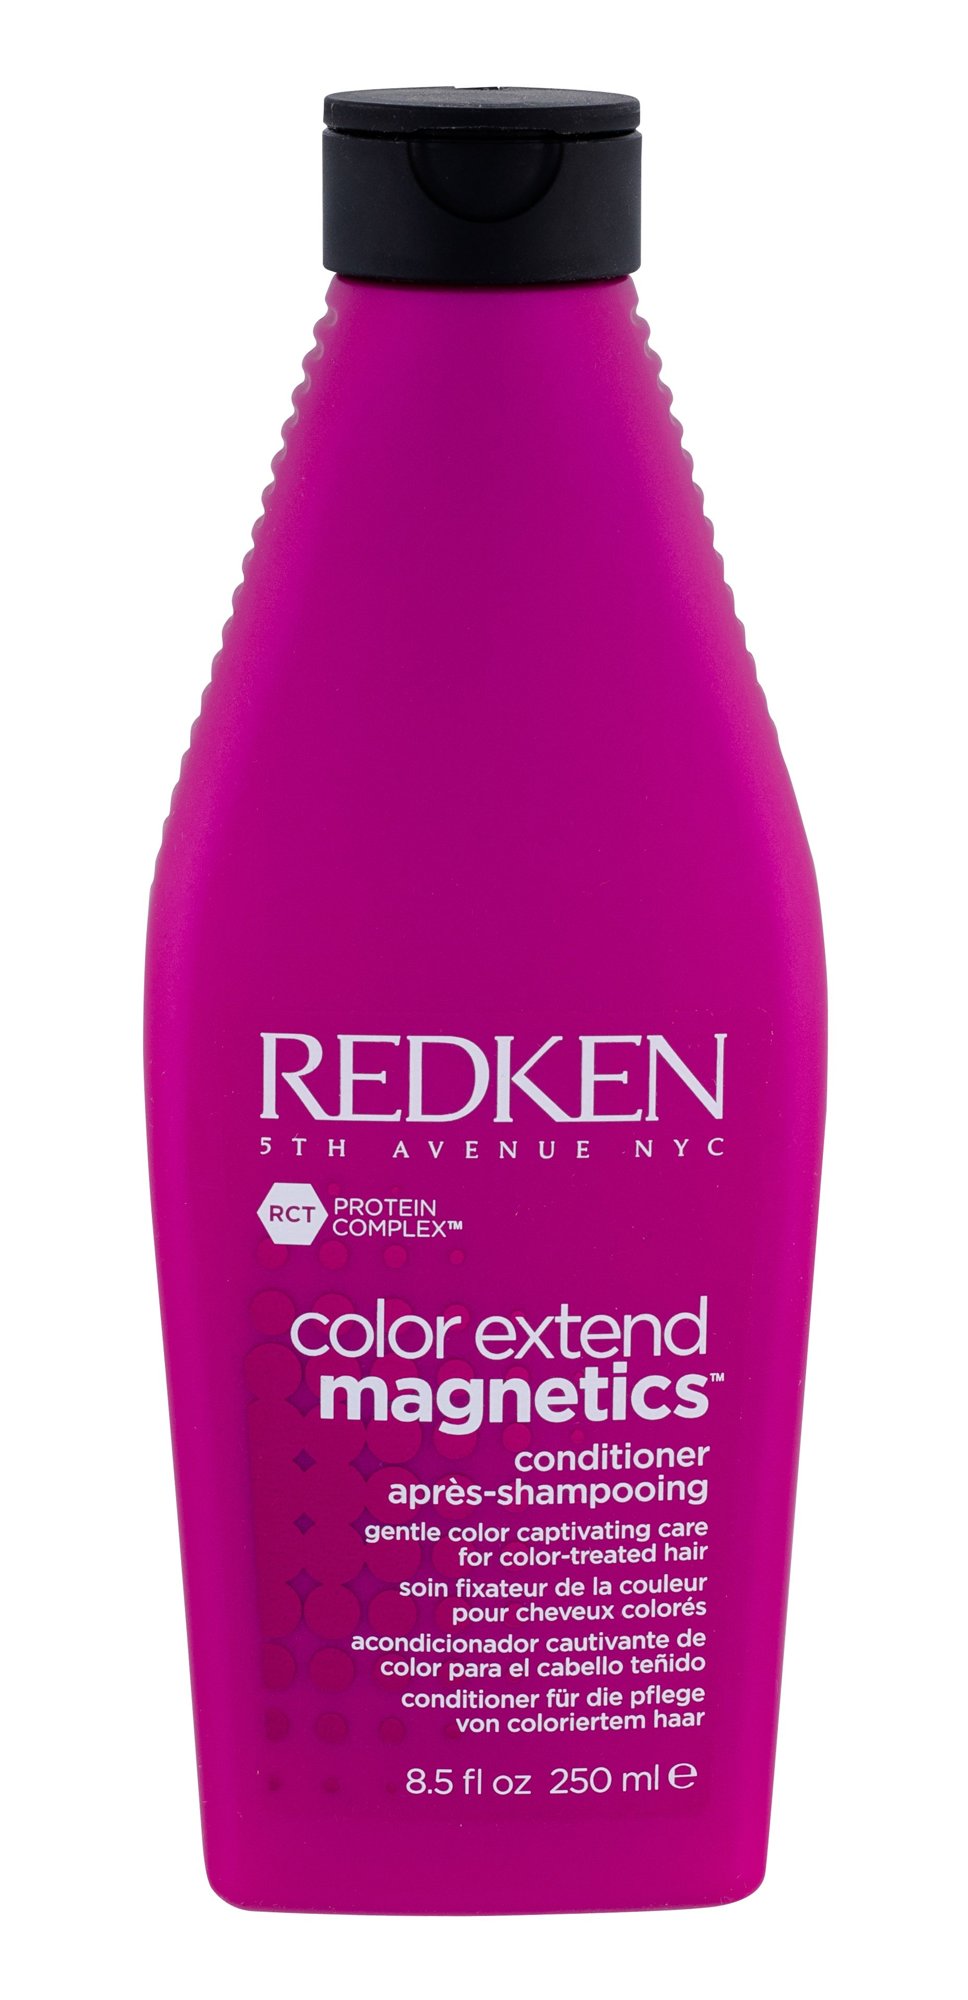 Redken Color Extend Magnetics 250ml kondicionierius